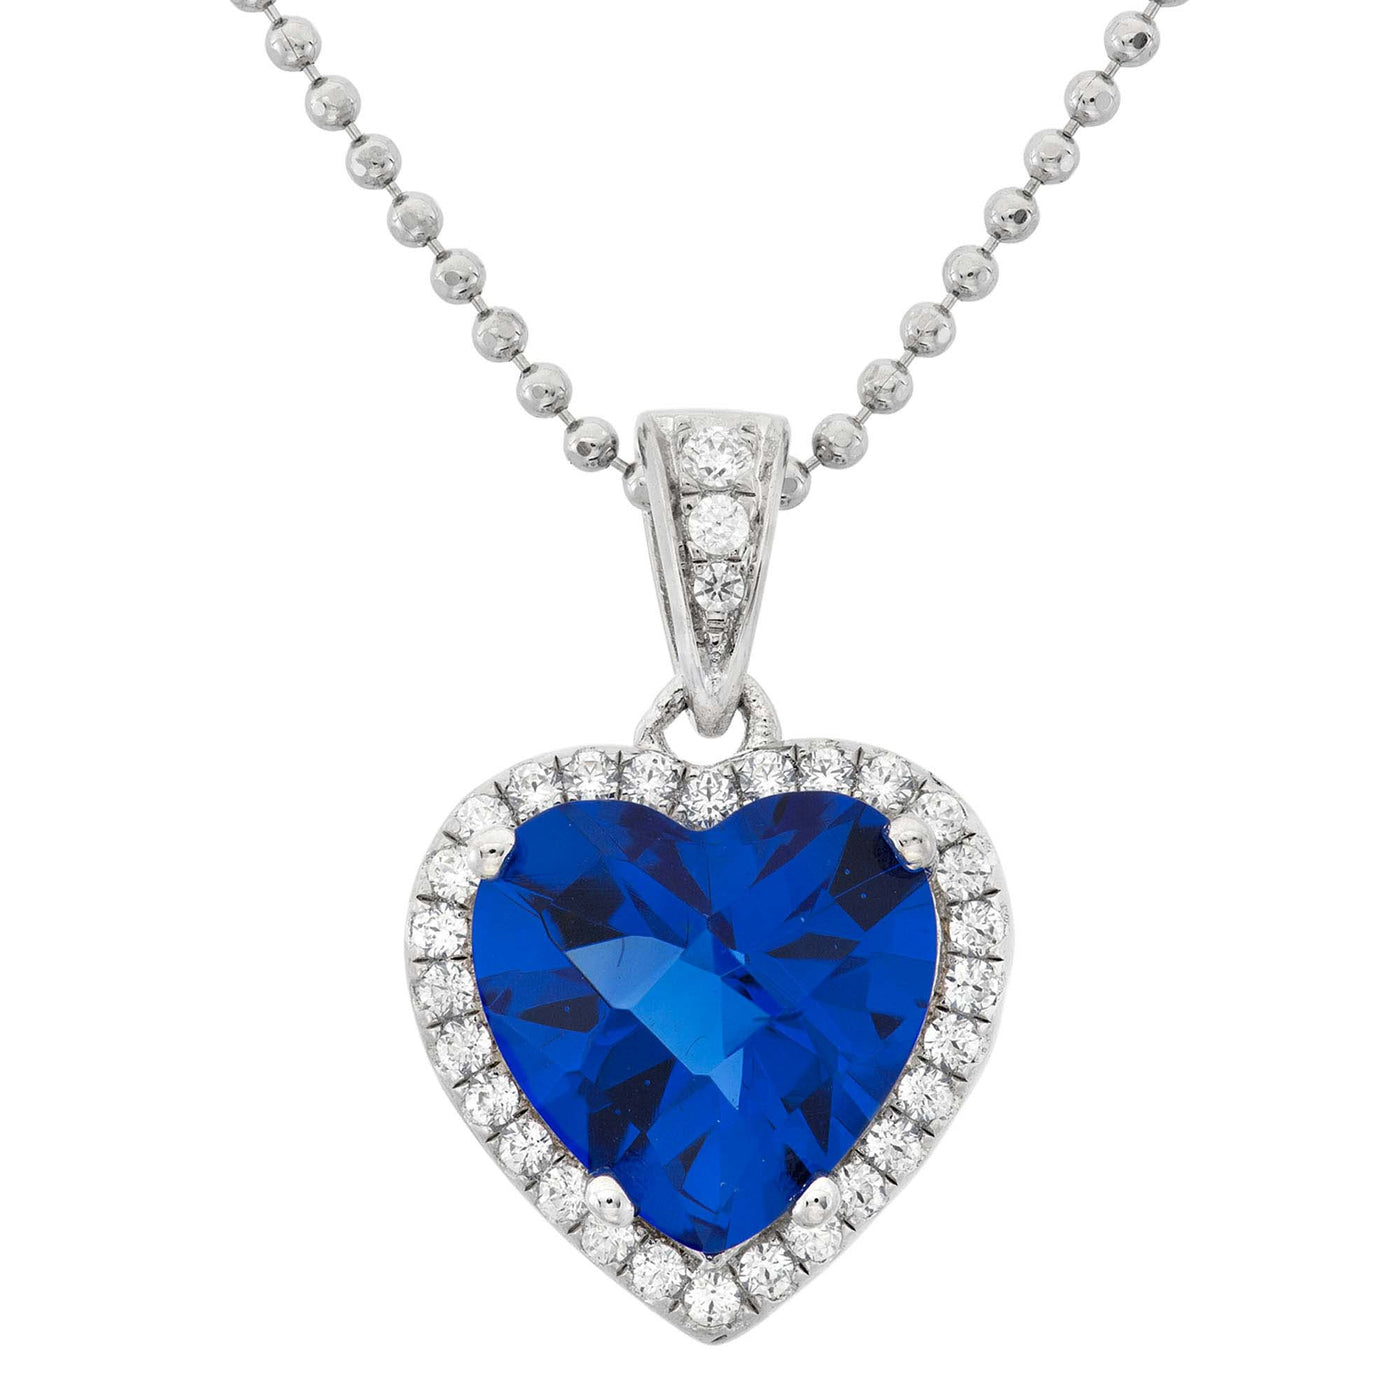 Rebecca Sloane Silver Pendant with Heart Cut Blue Obsidian